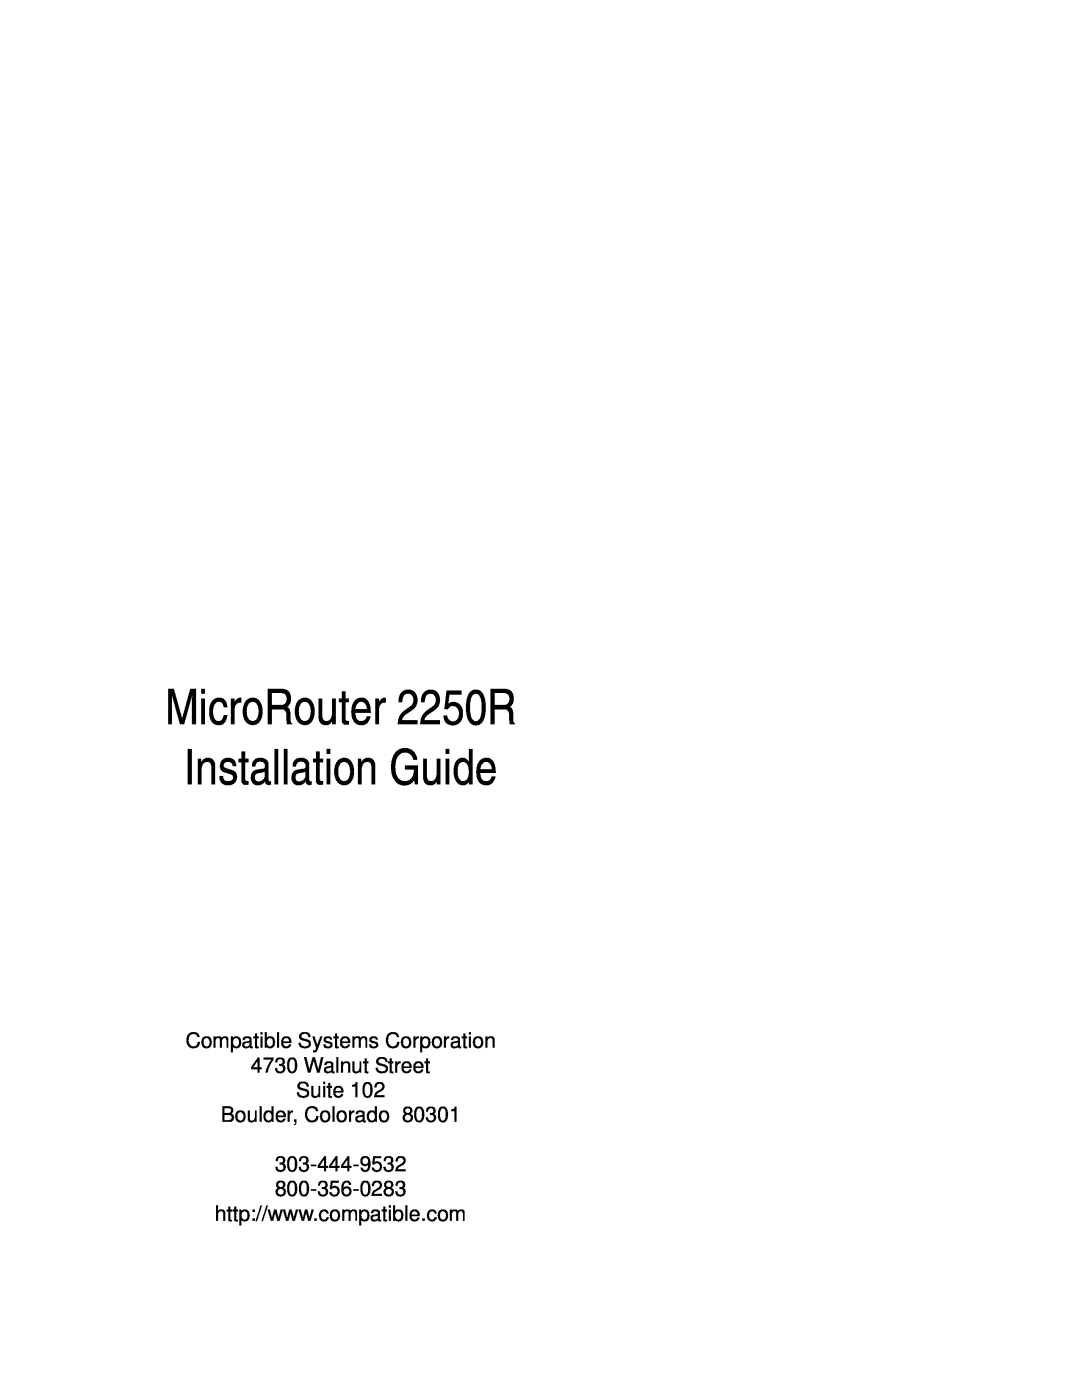 Compatible Systems manual MicroRouter 2250R, Installation Guide, Boulder, Colorado 